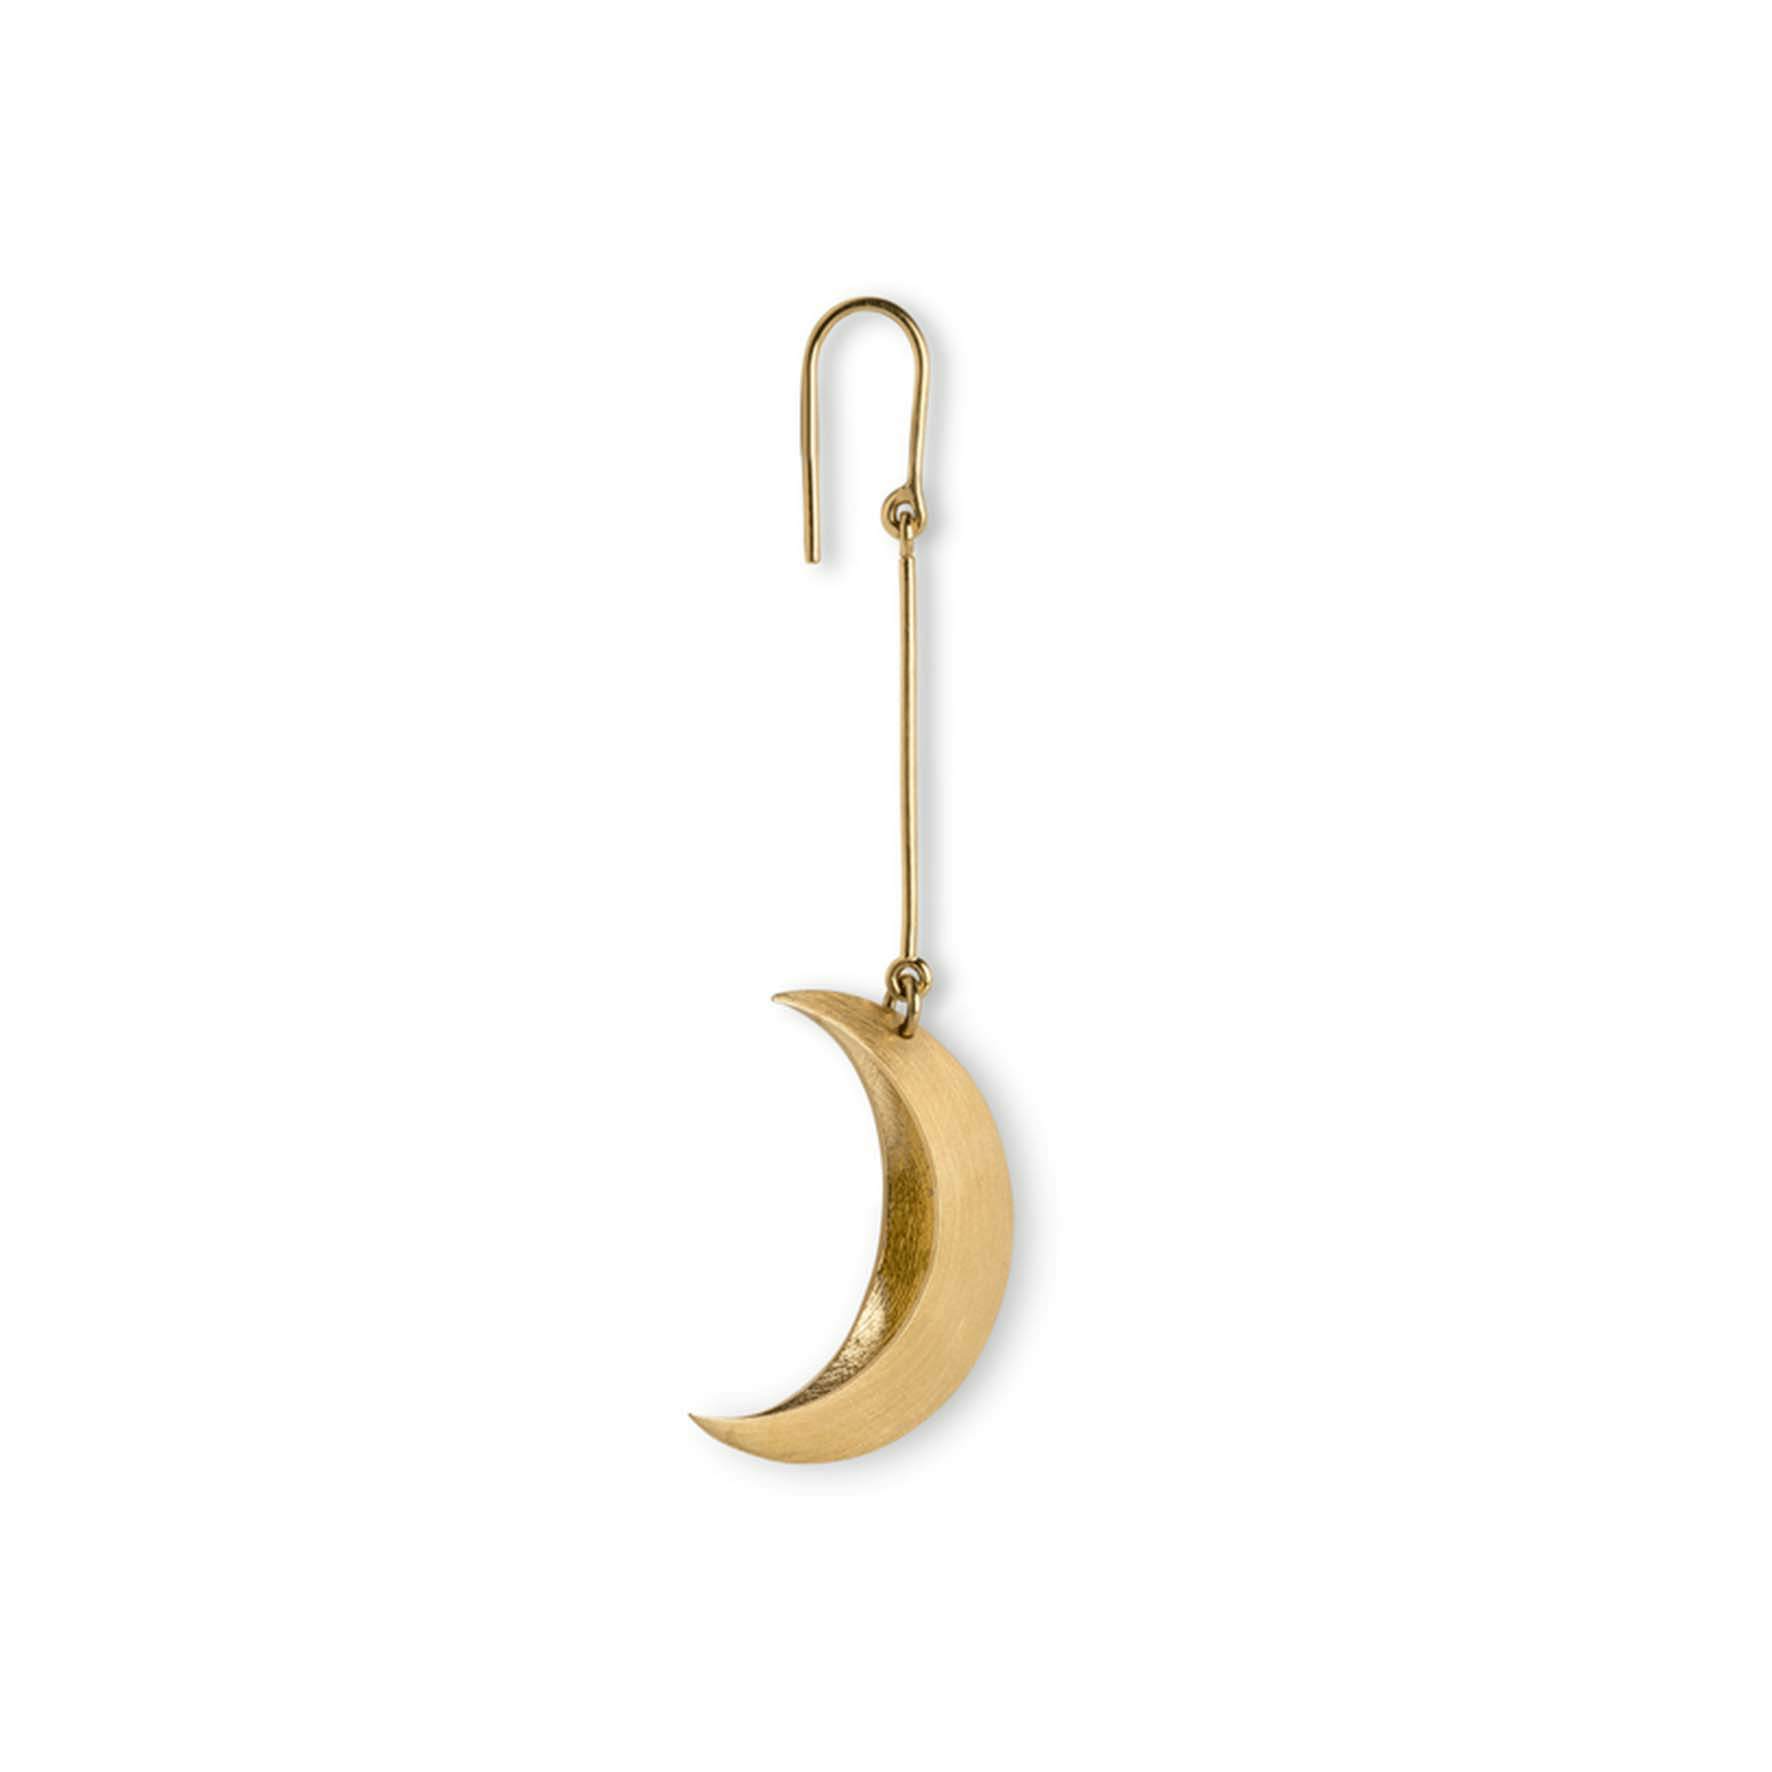 Half Moon Earring from Jane Kønig in Goldplated-Silver Sterling 925